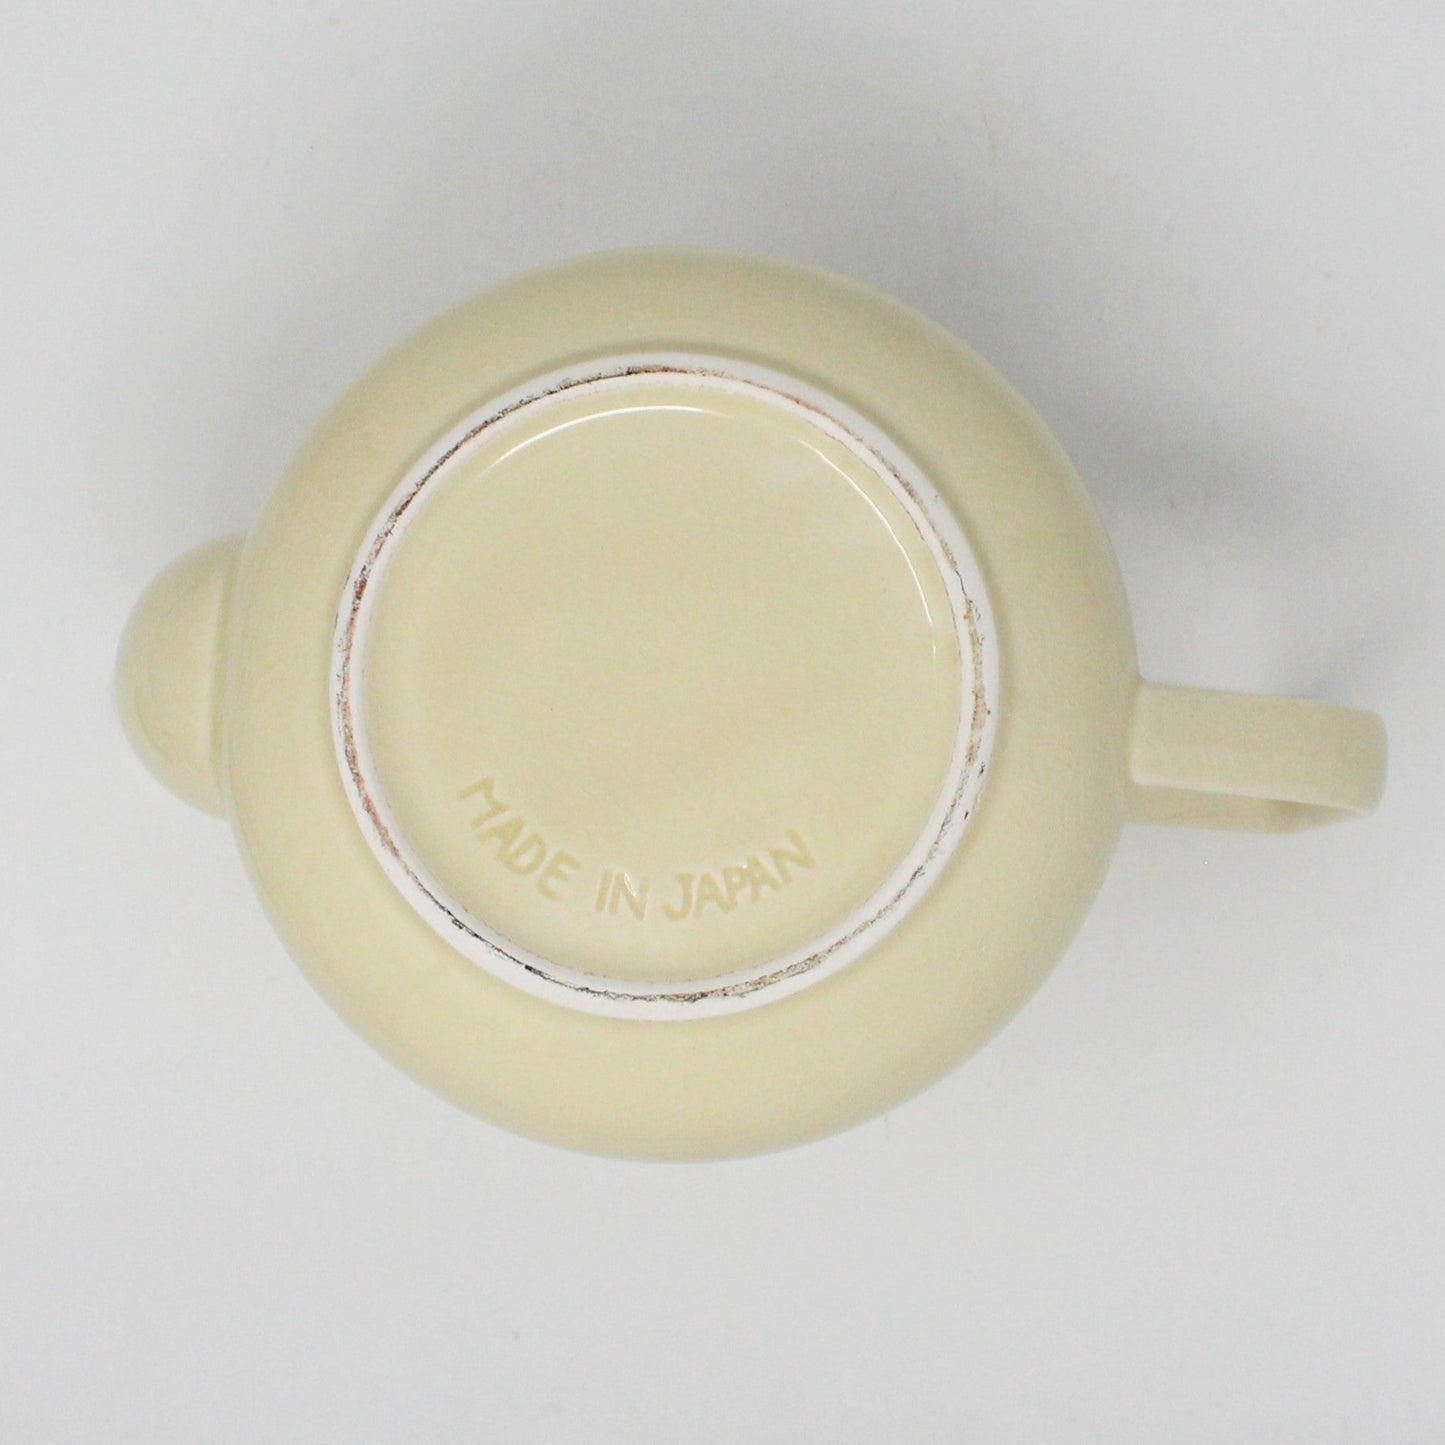 Teapot, Beige and Brown Floral, Japan Ceramic, Vintage